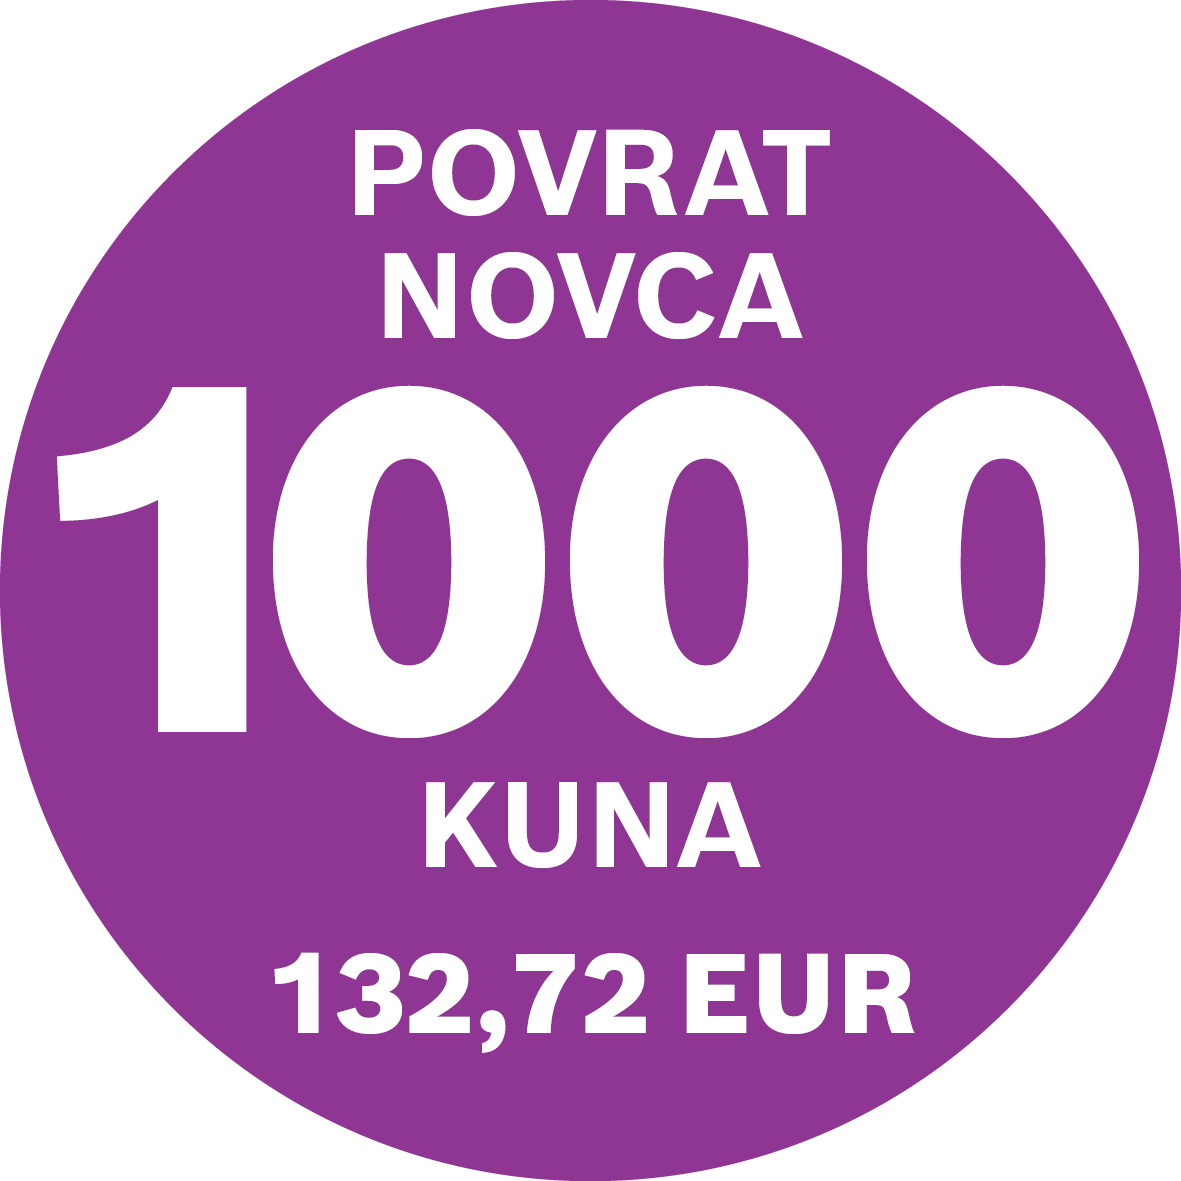 bosch-povrat-novca-1000-kuna-na-pecnice-.png